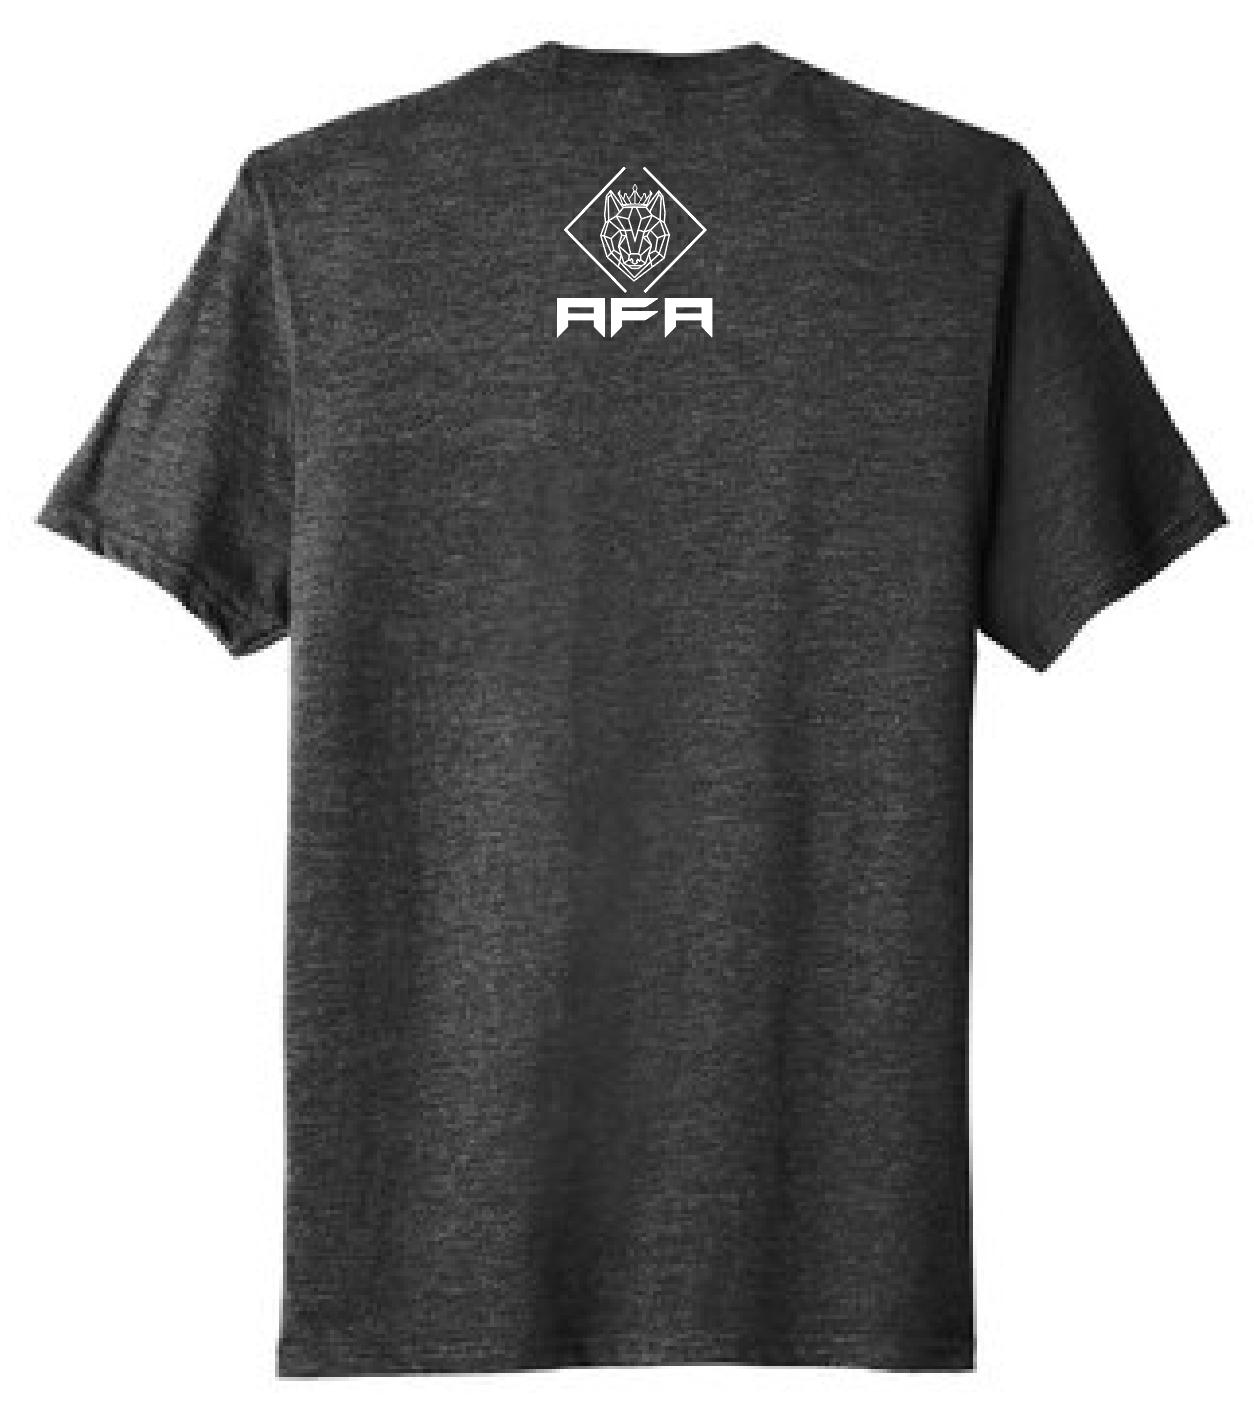 AFA Black Heather T-shirt - Train to evolve